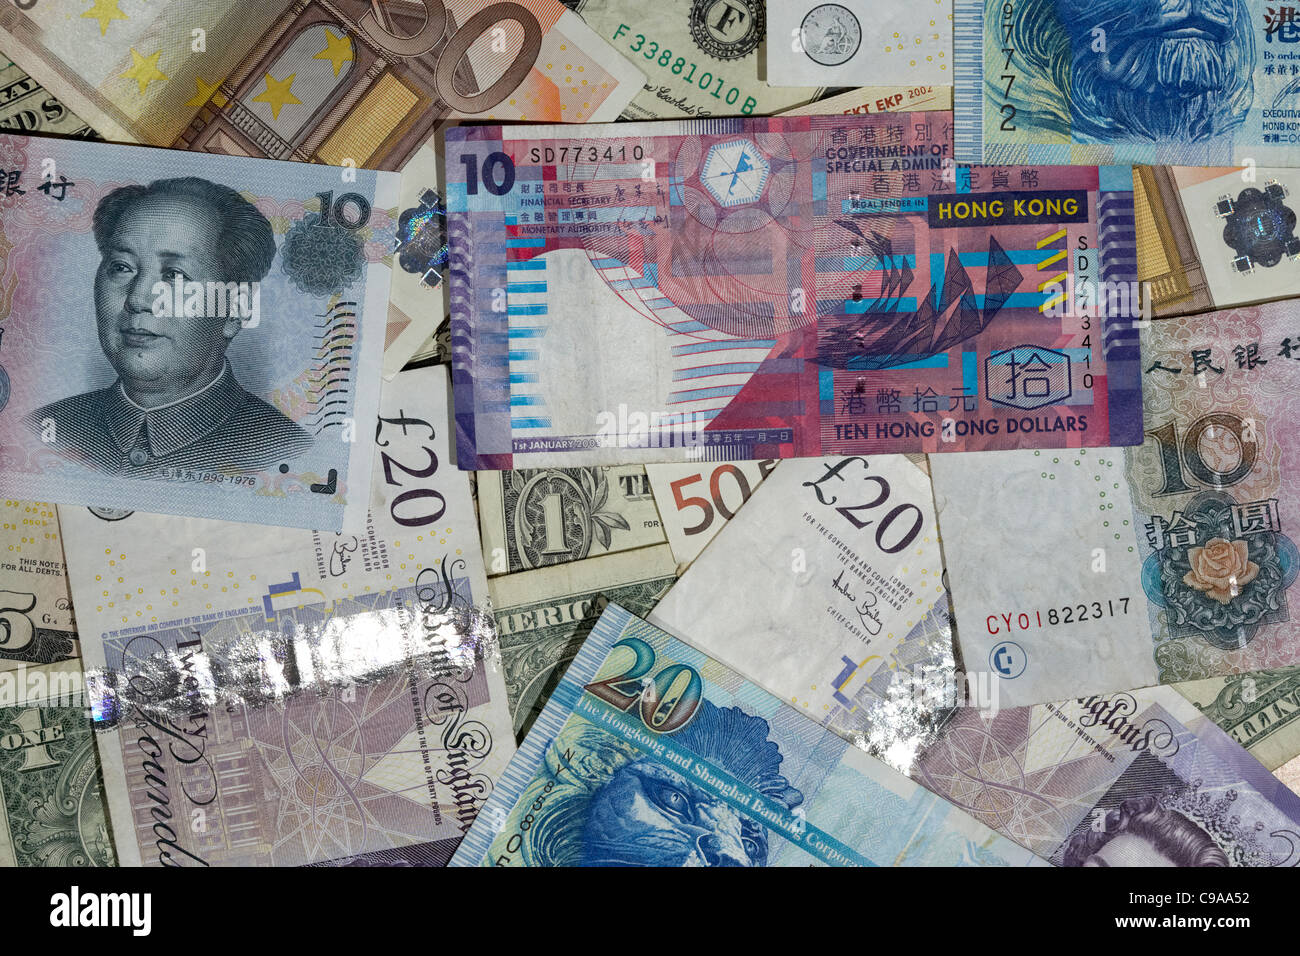 multiple currencies including chinese renminbi rmb hong kong dollars us dollars british pounds and euro banknotes Stock Photo